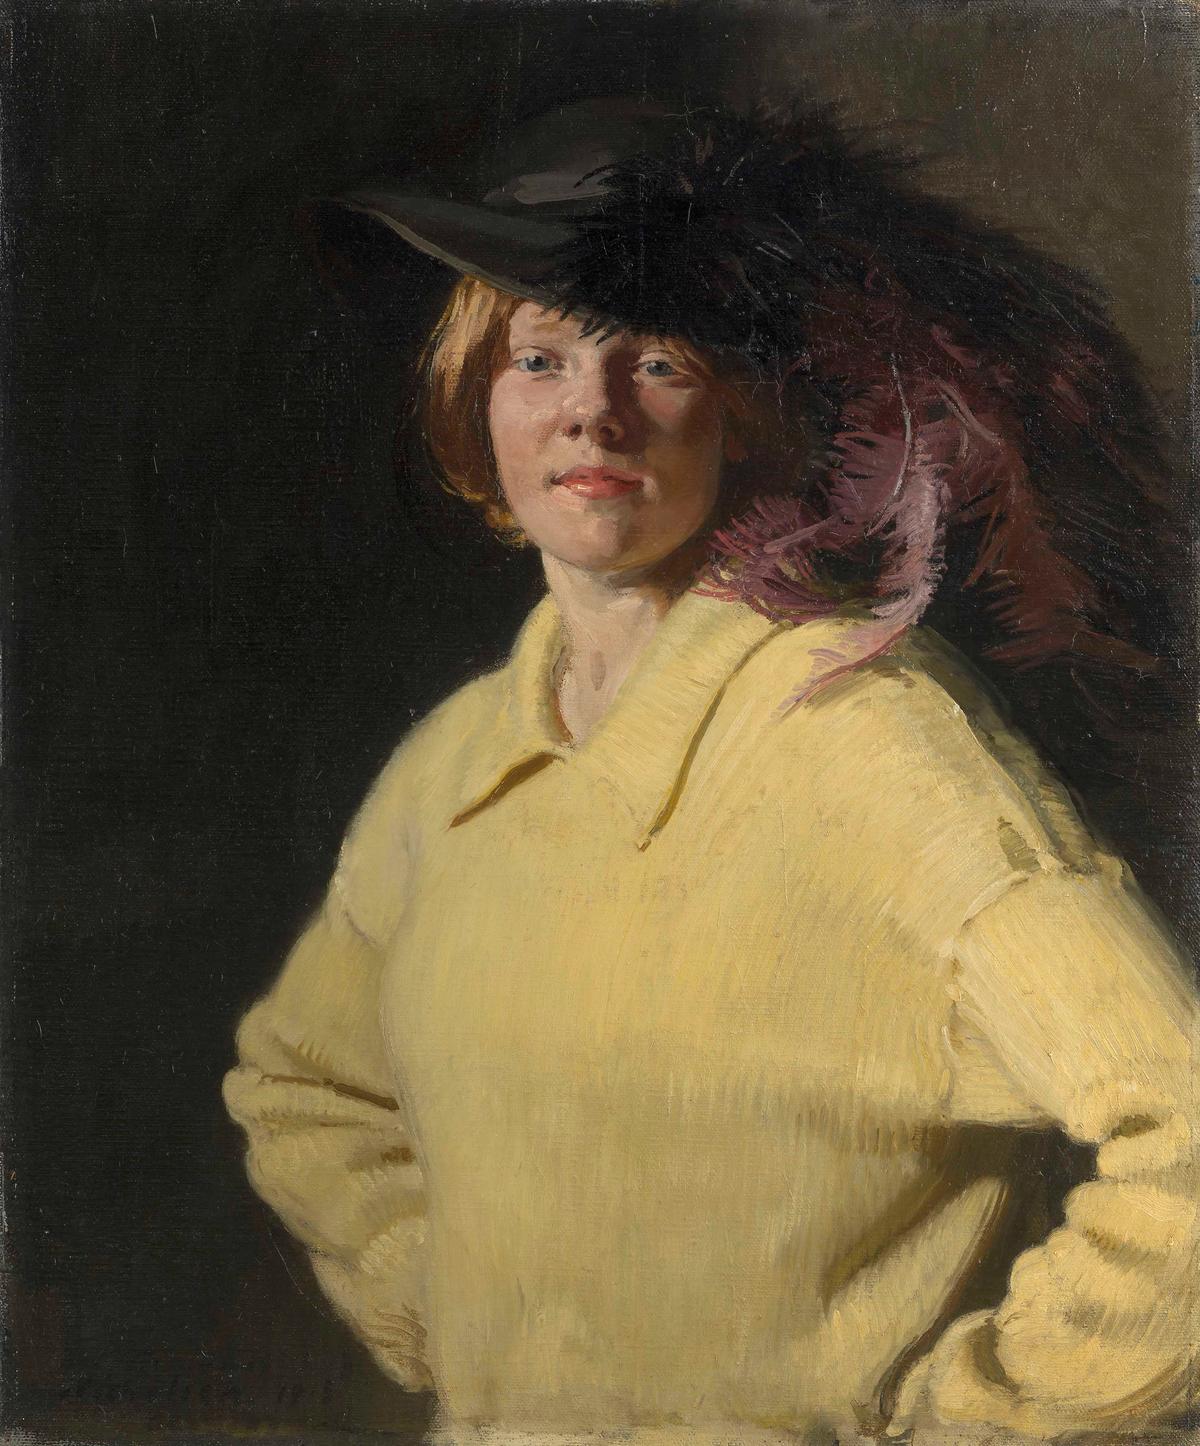 William Nicholson, The Yellow Jersey (1913) Daniel Katz